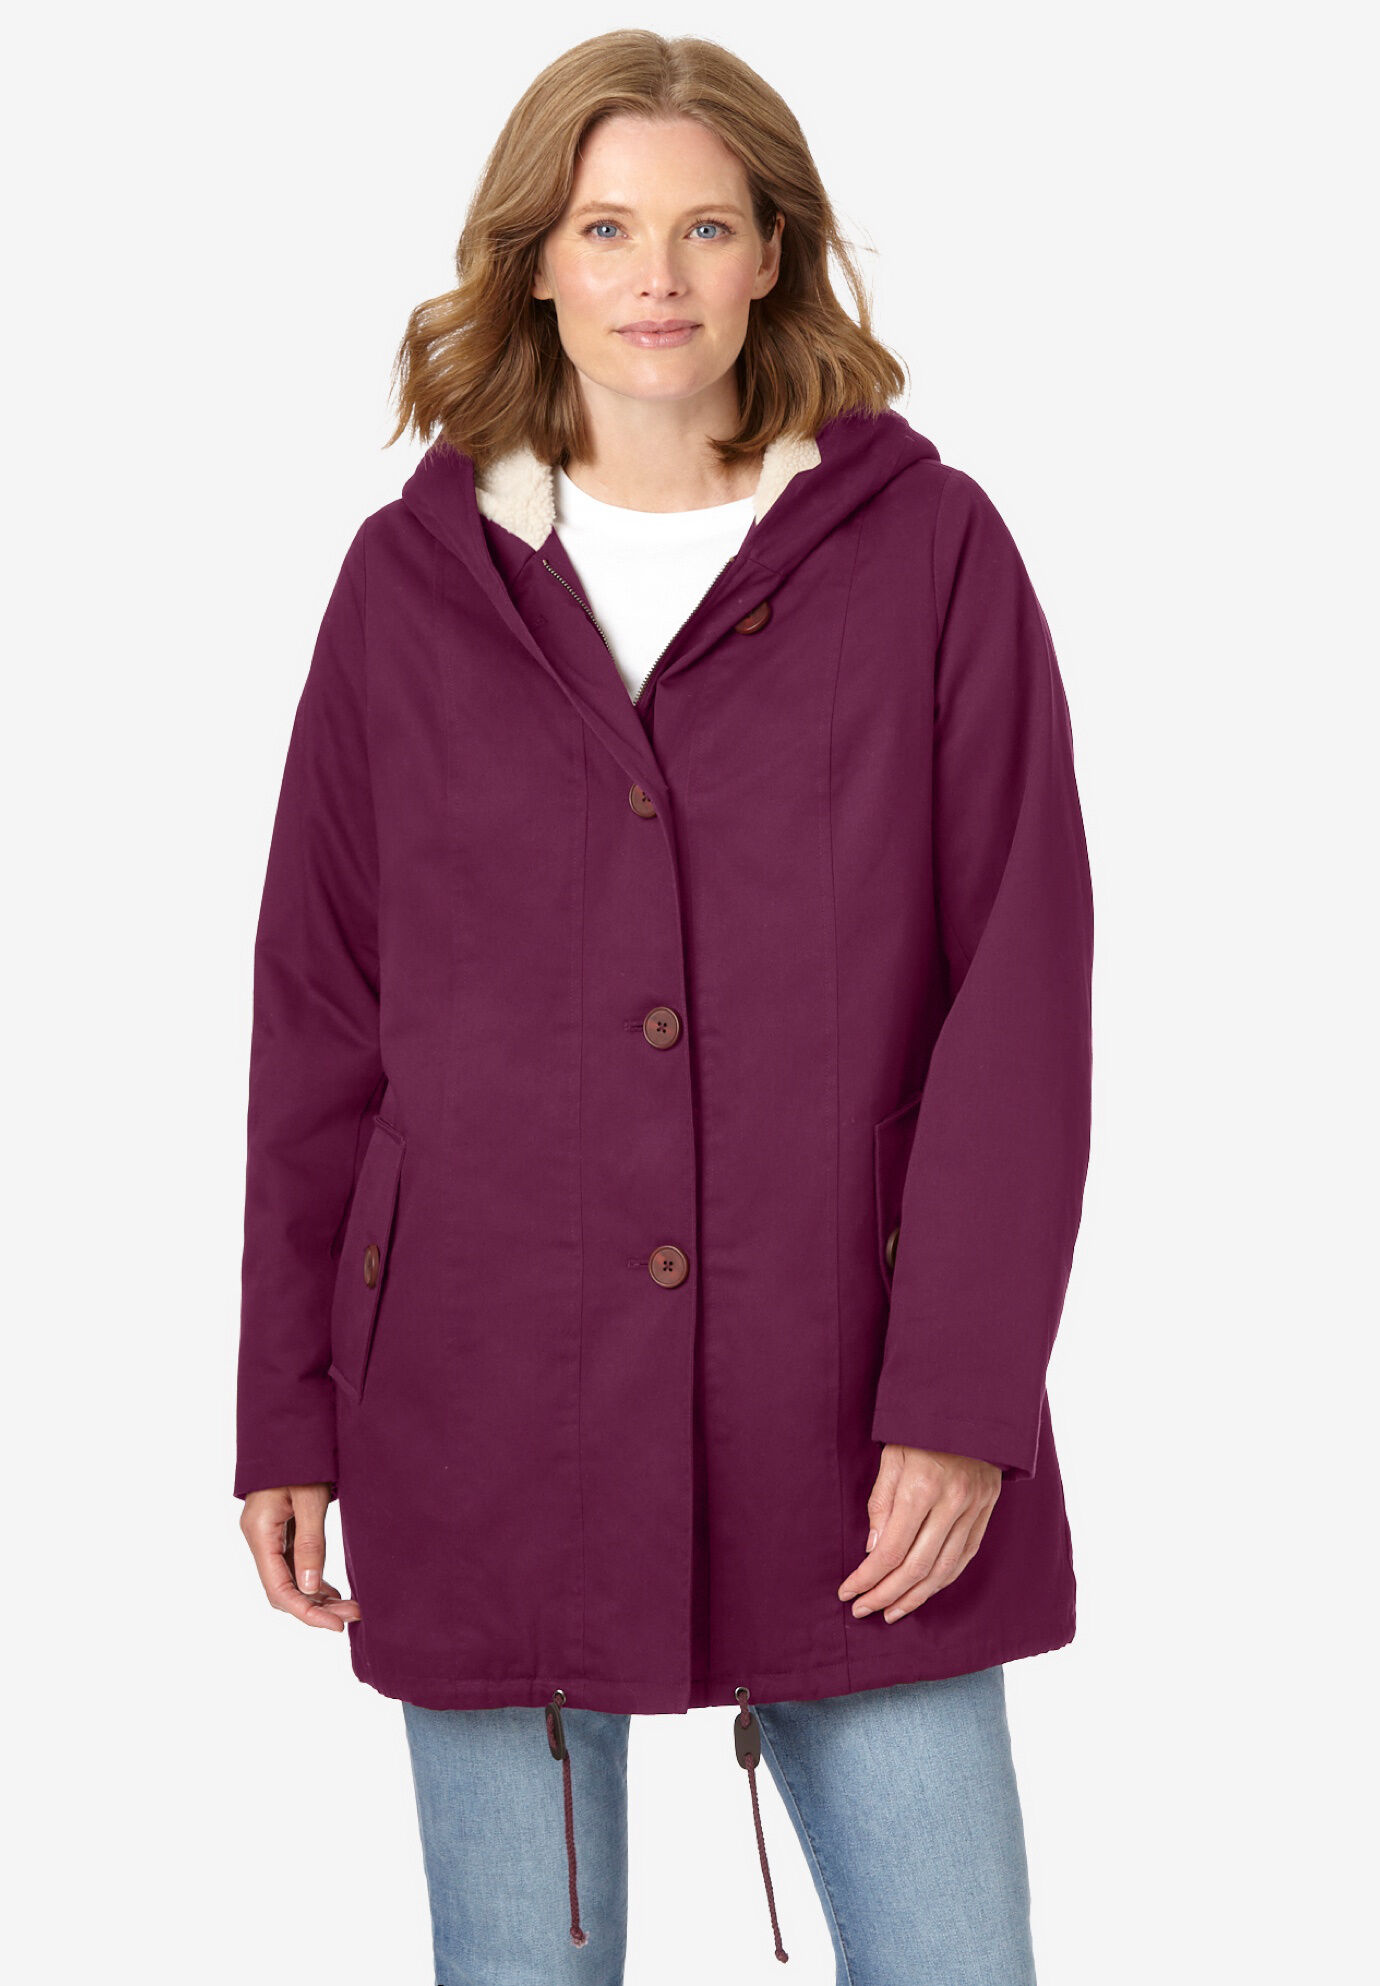 BUKINIE Winter Coat for Women Plus Size Ladies Sherpa Fleece Lined Hoodie Jacket Zip up Hooded Sweatshirt Jackets 